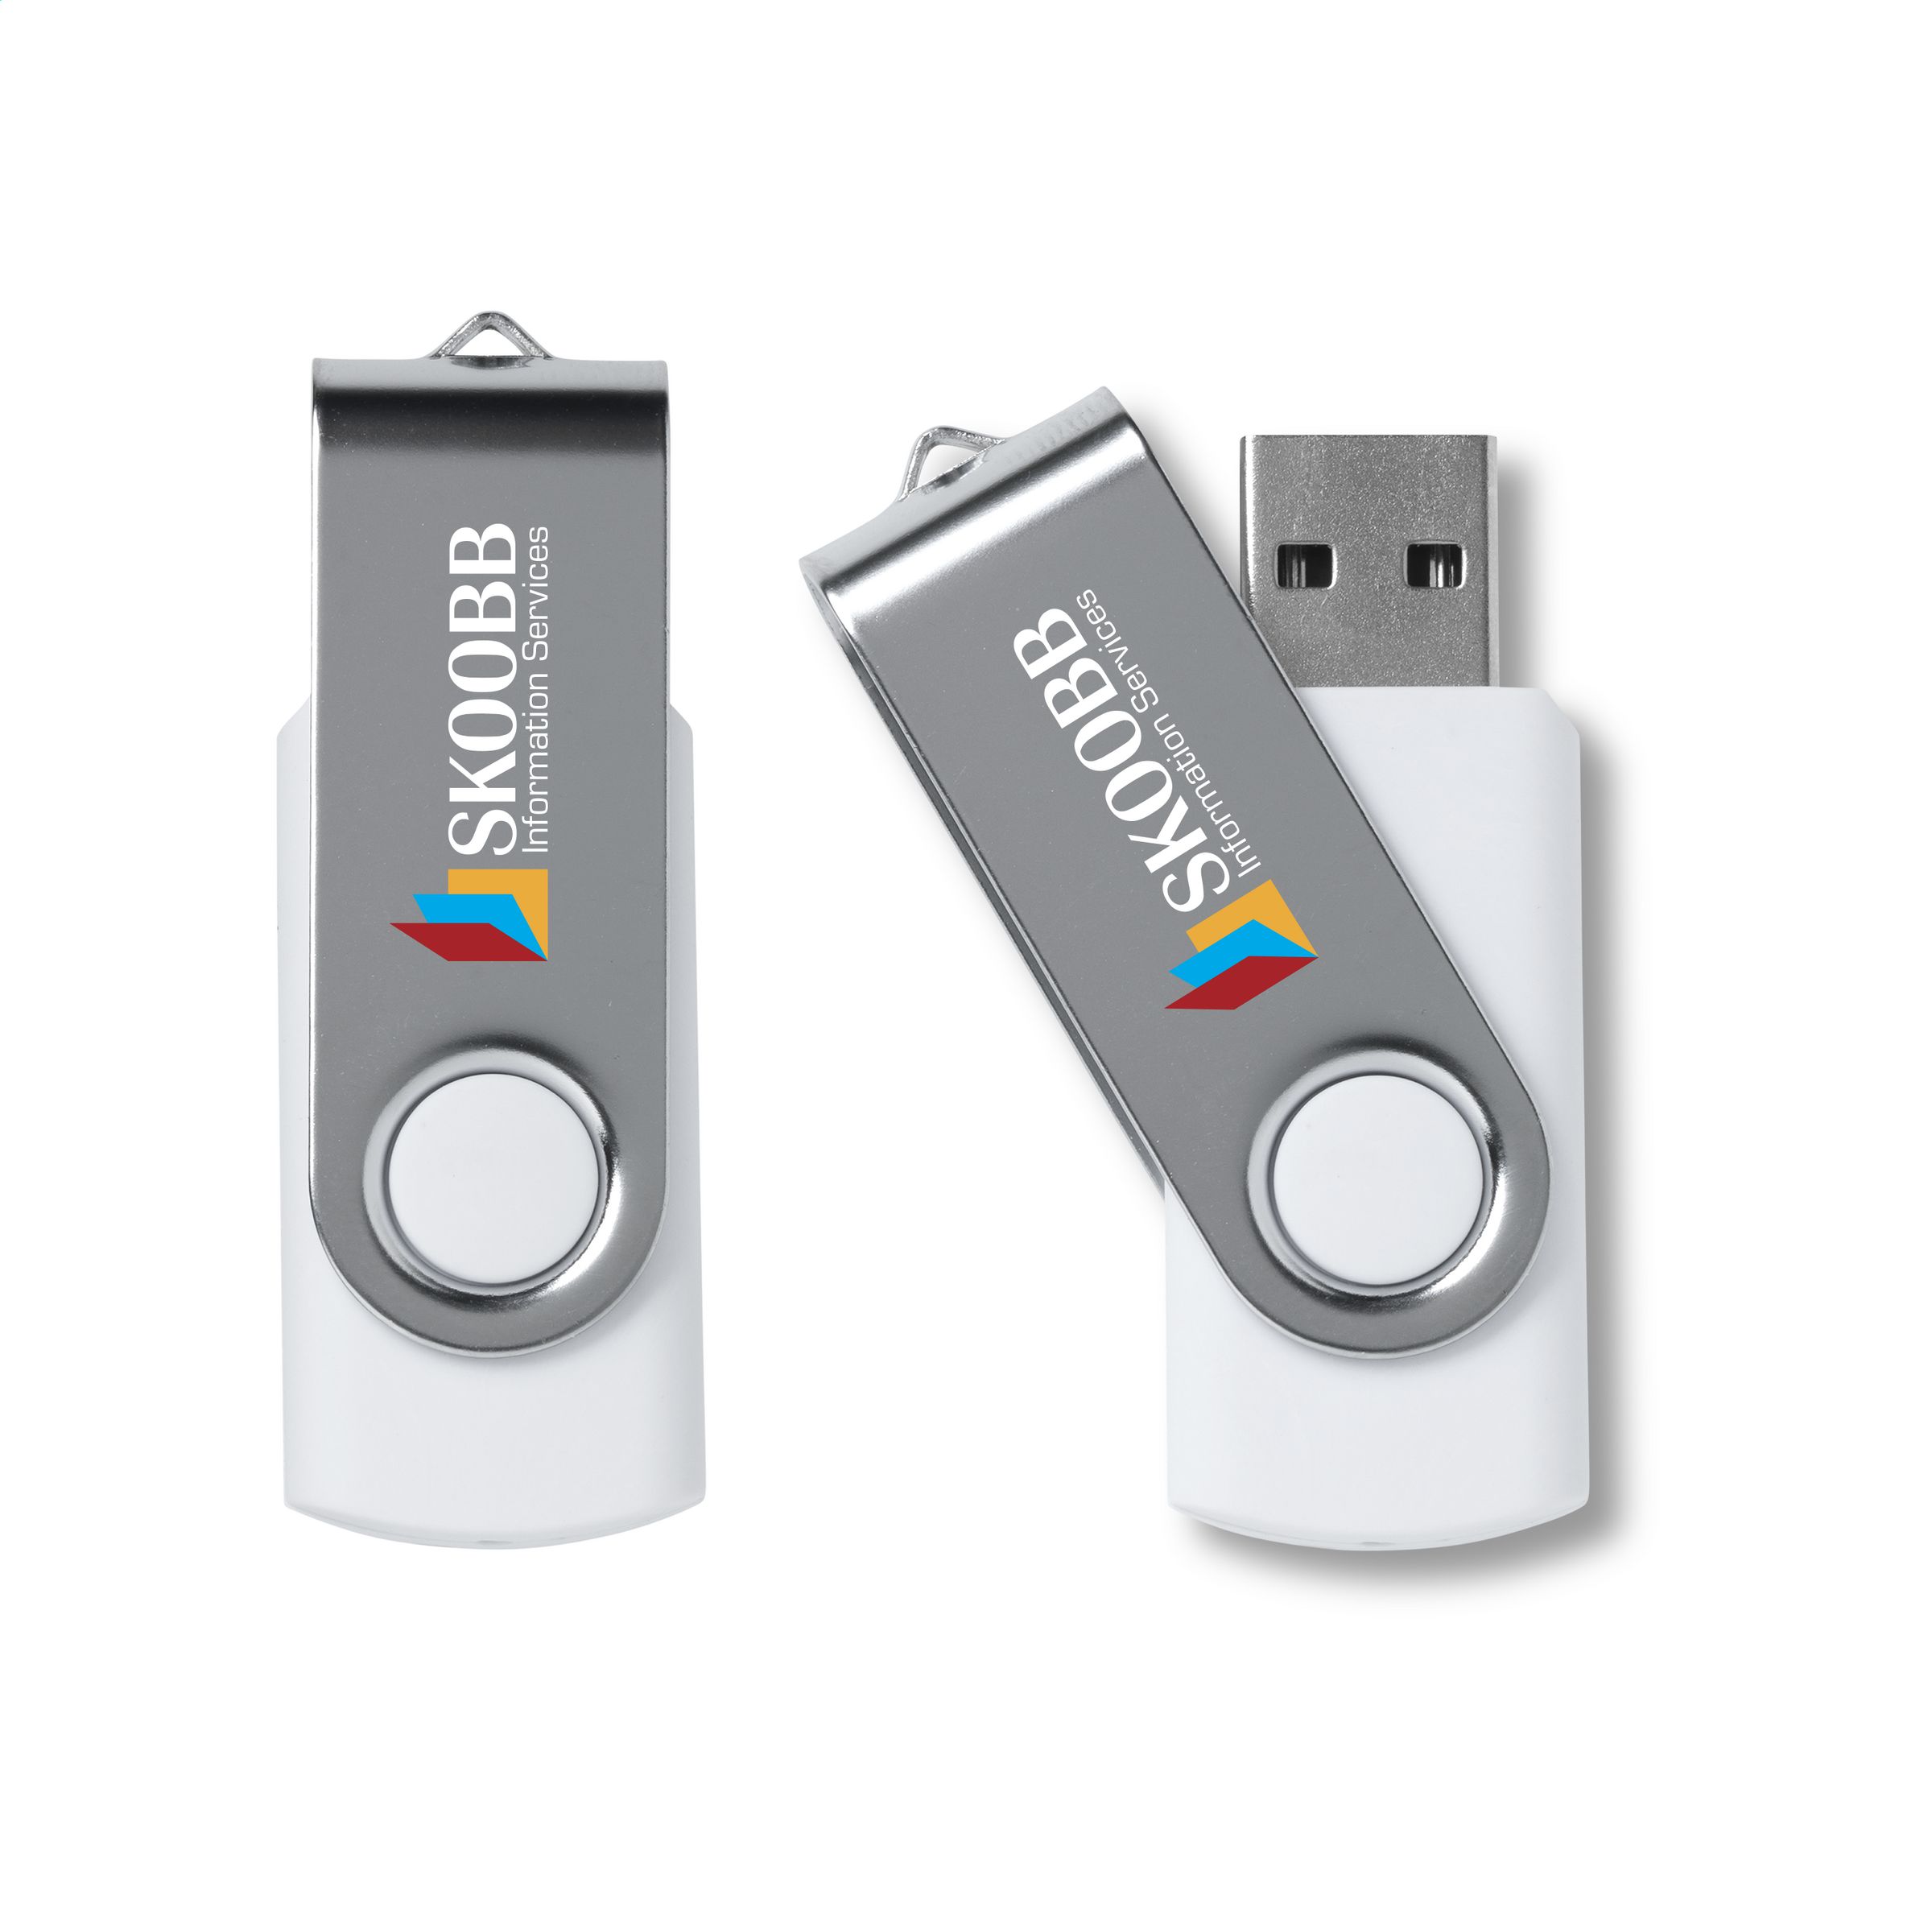 DataSafe USB 2.0 - Montcuq - Zaprinta Belgique